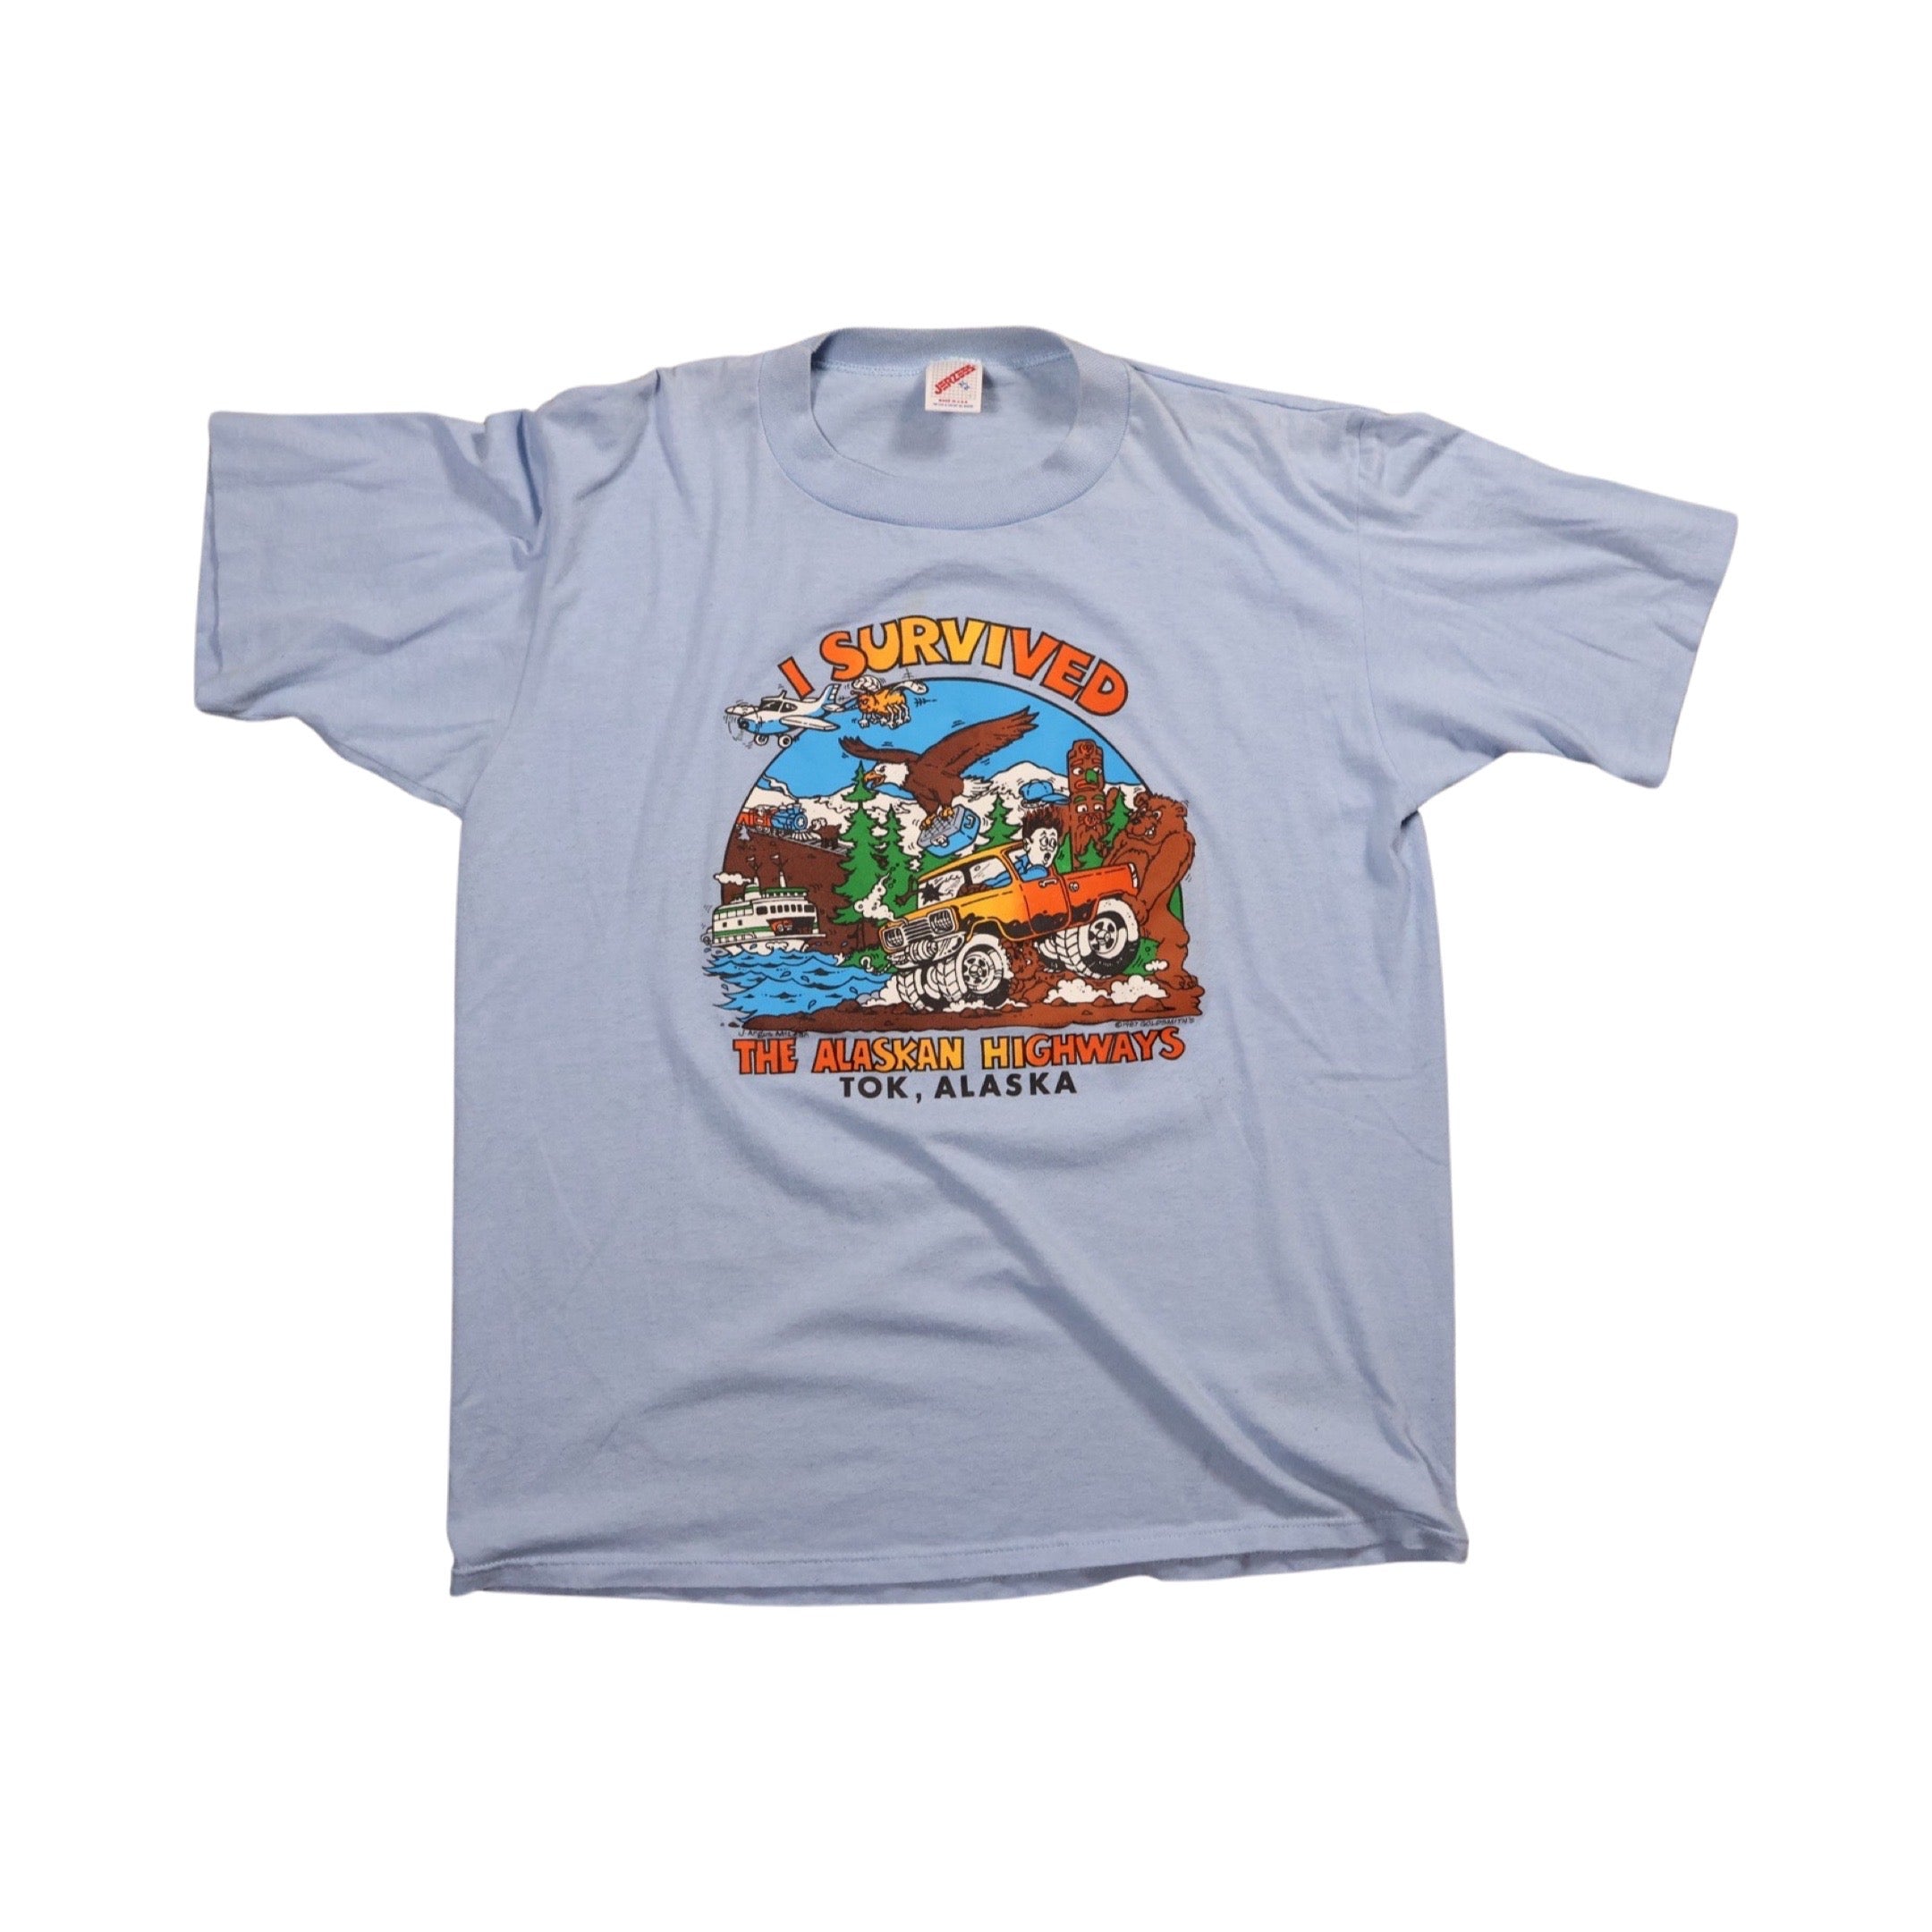 I Survived The Alaskan Highway 1987 T-Shirt (Large)